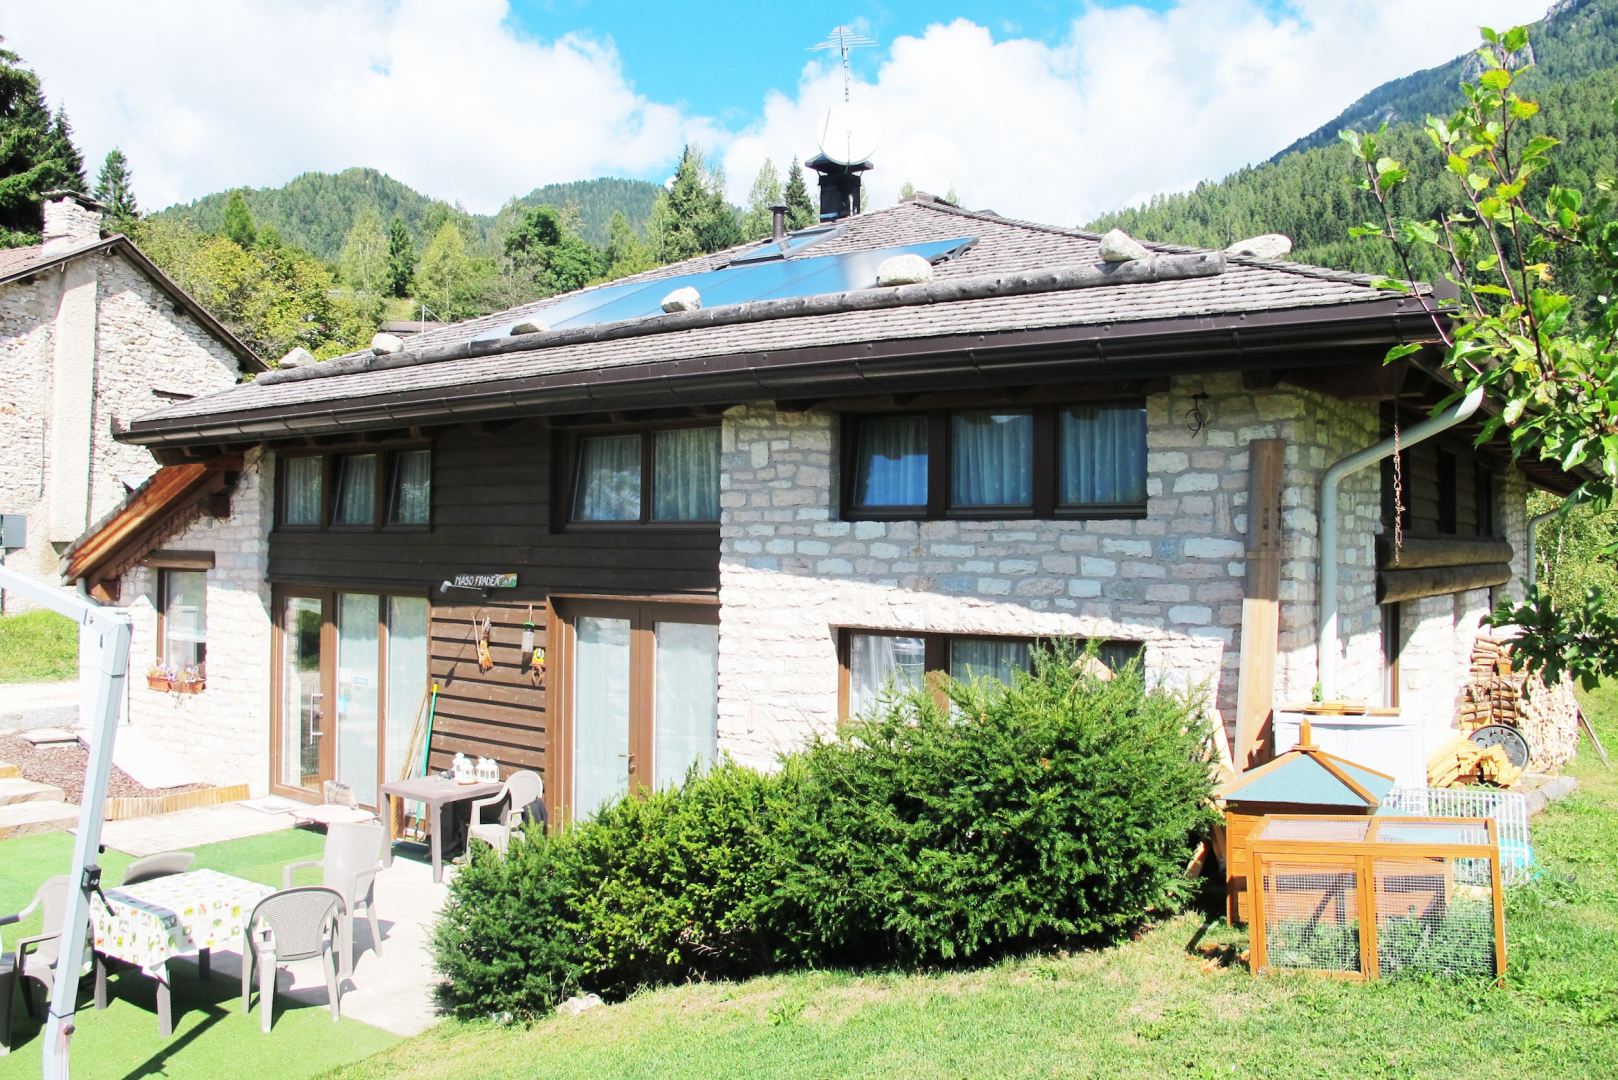 For sale cottage in mountain Castello Tesino Trentino-Alto Adige